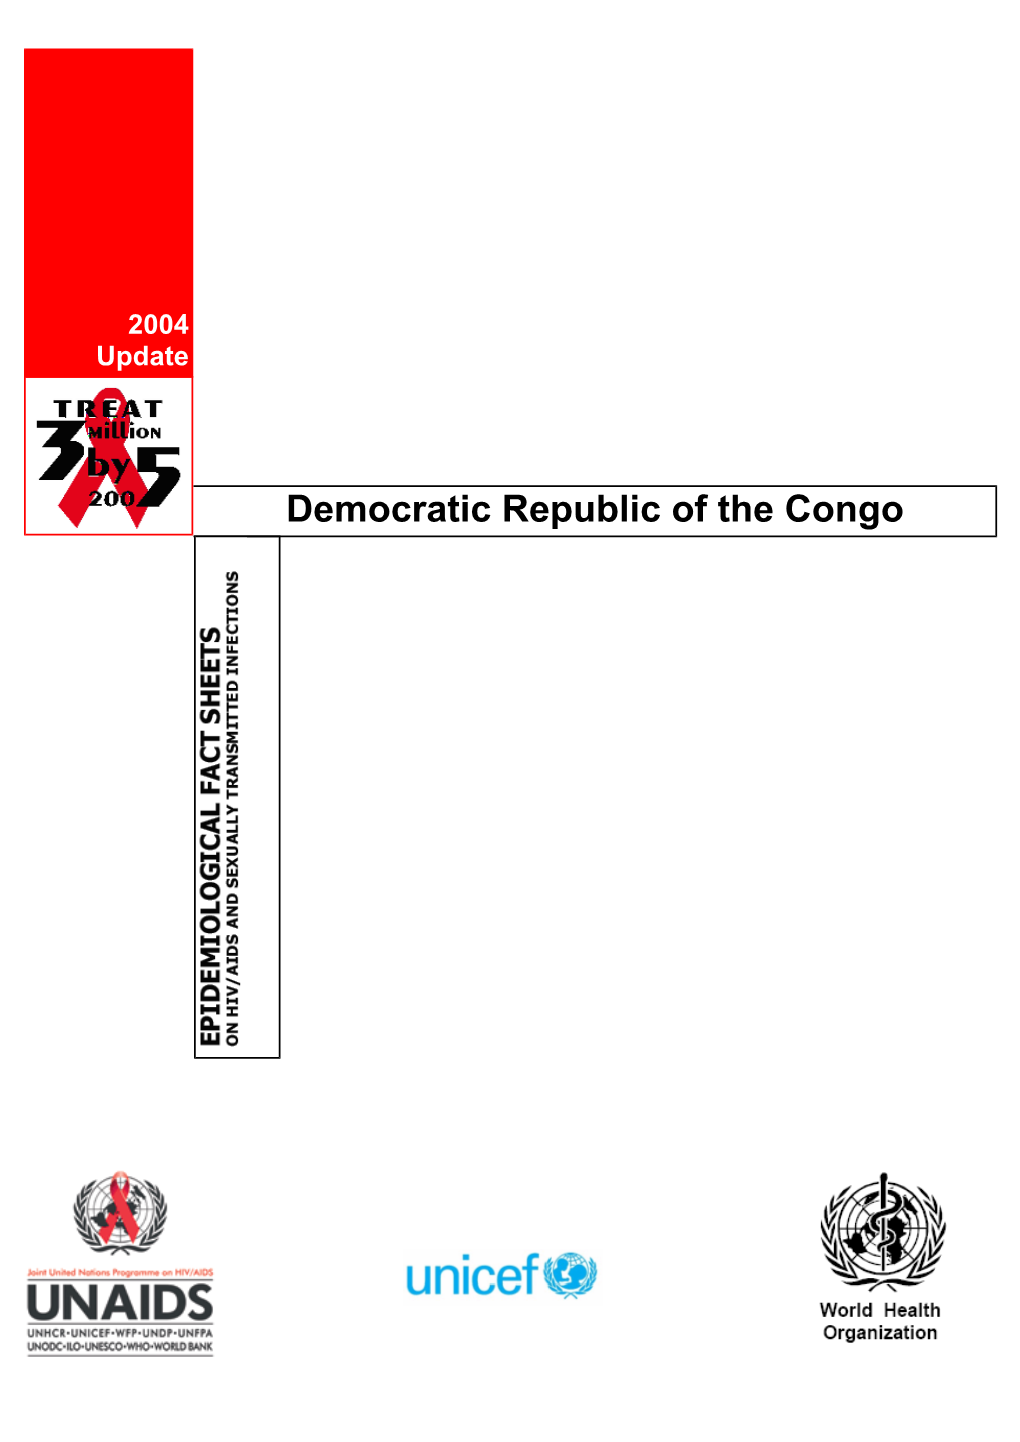 Democratic Republic of the Congo Page - 2 Democratic Republic of the Congo